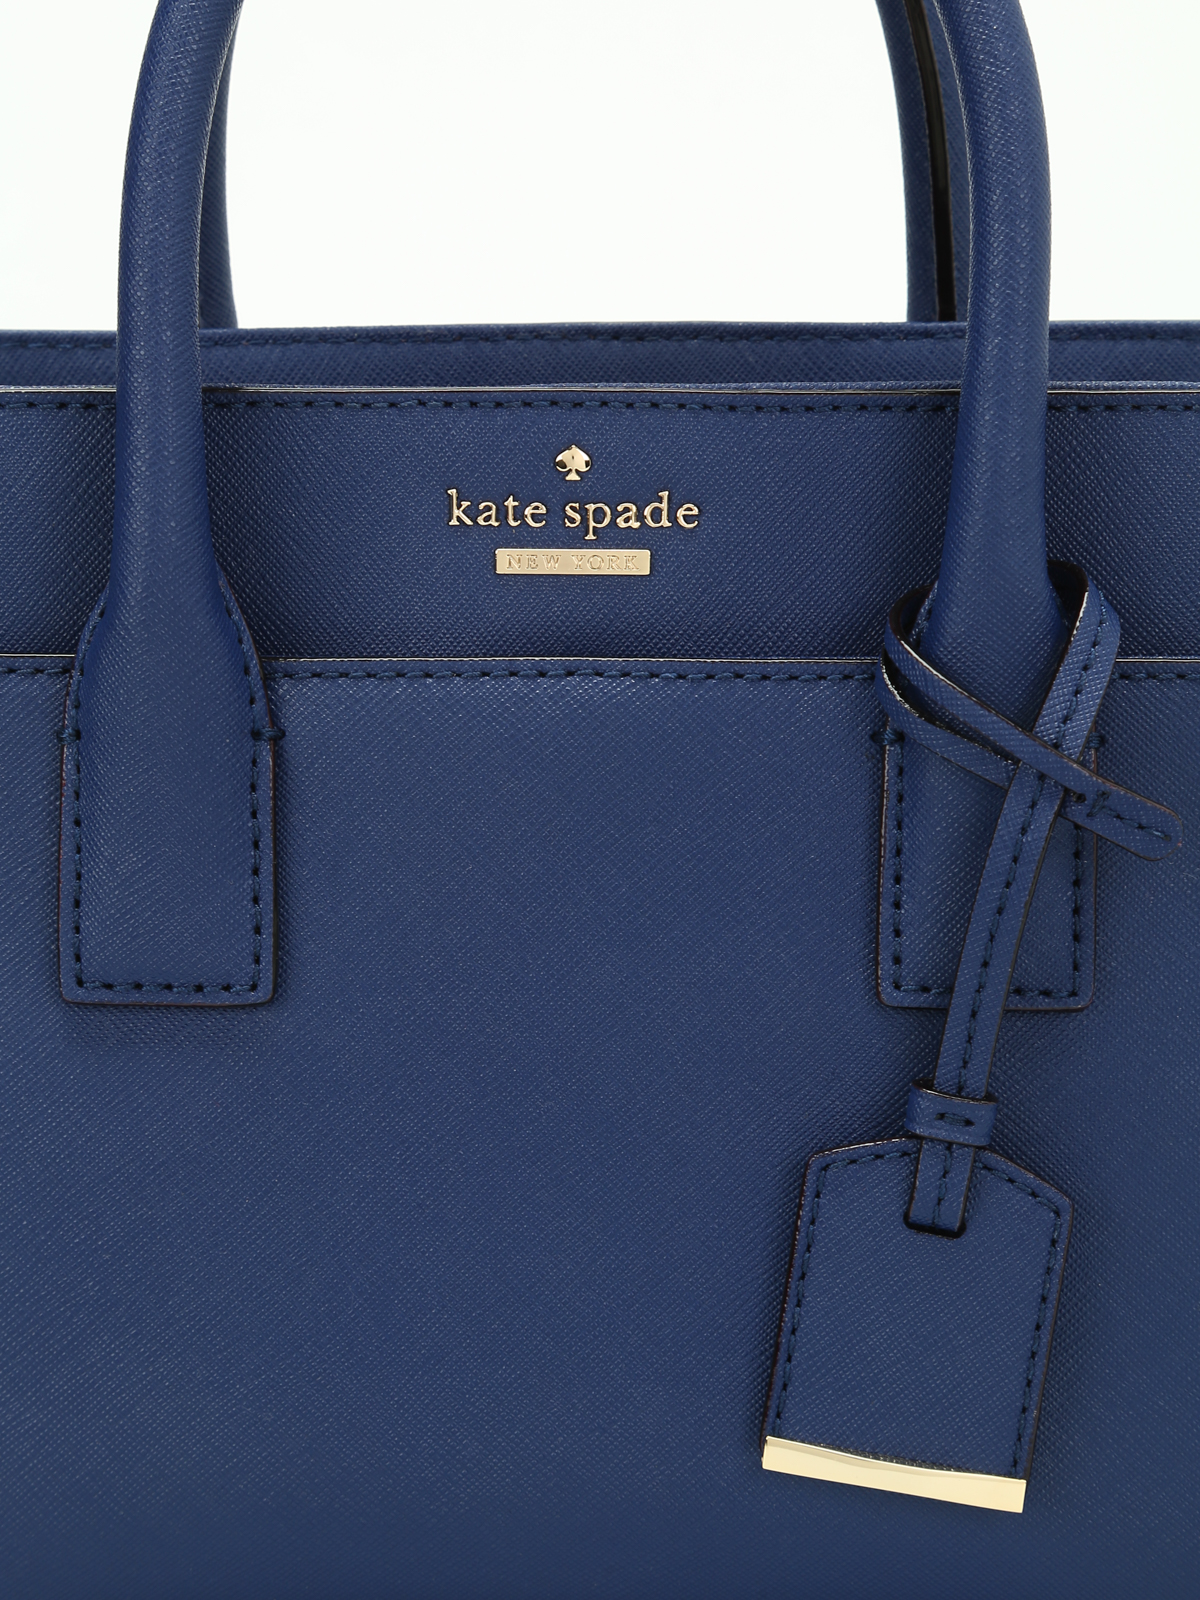 Kate Spade New York Cameron Street Mini Candace Women's Black Satchel Bag